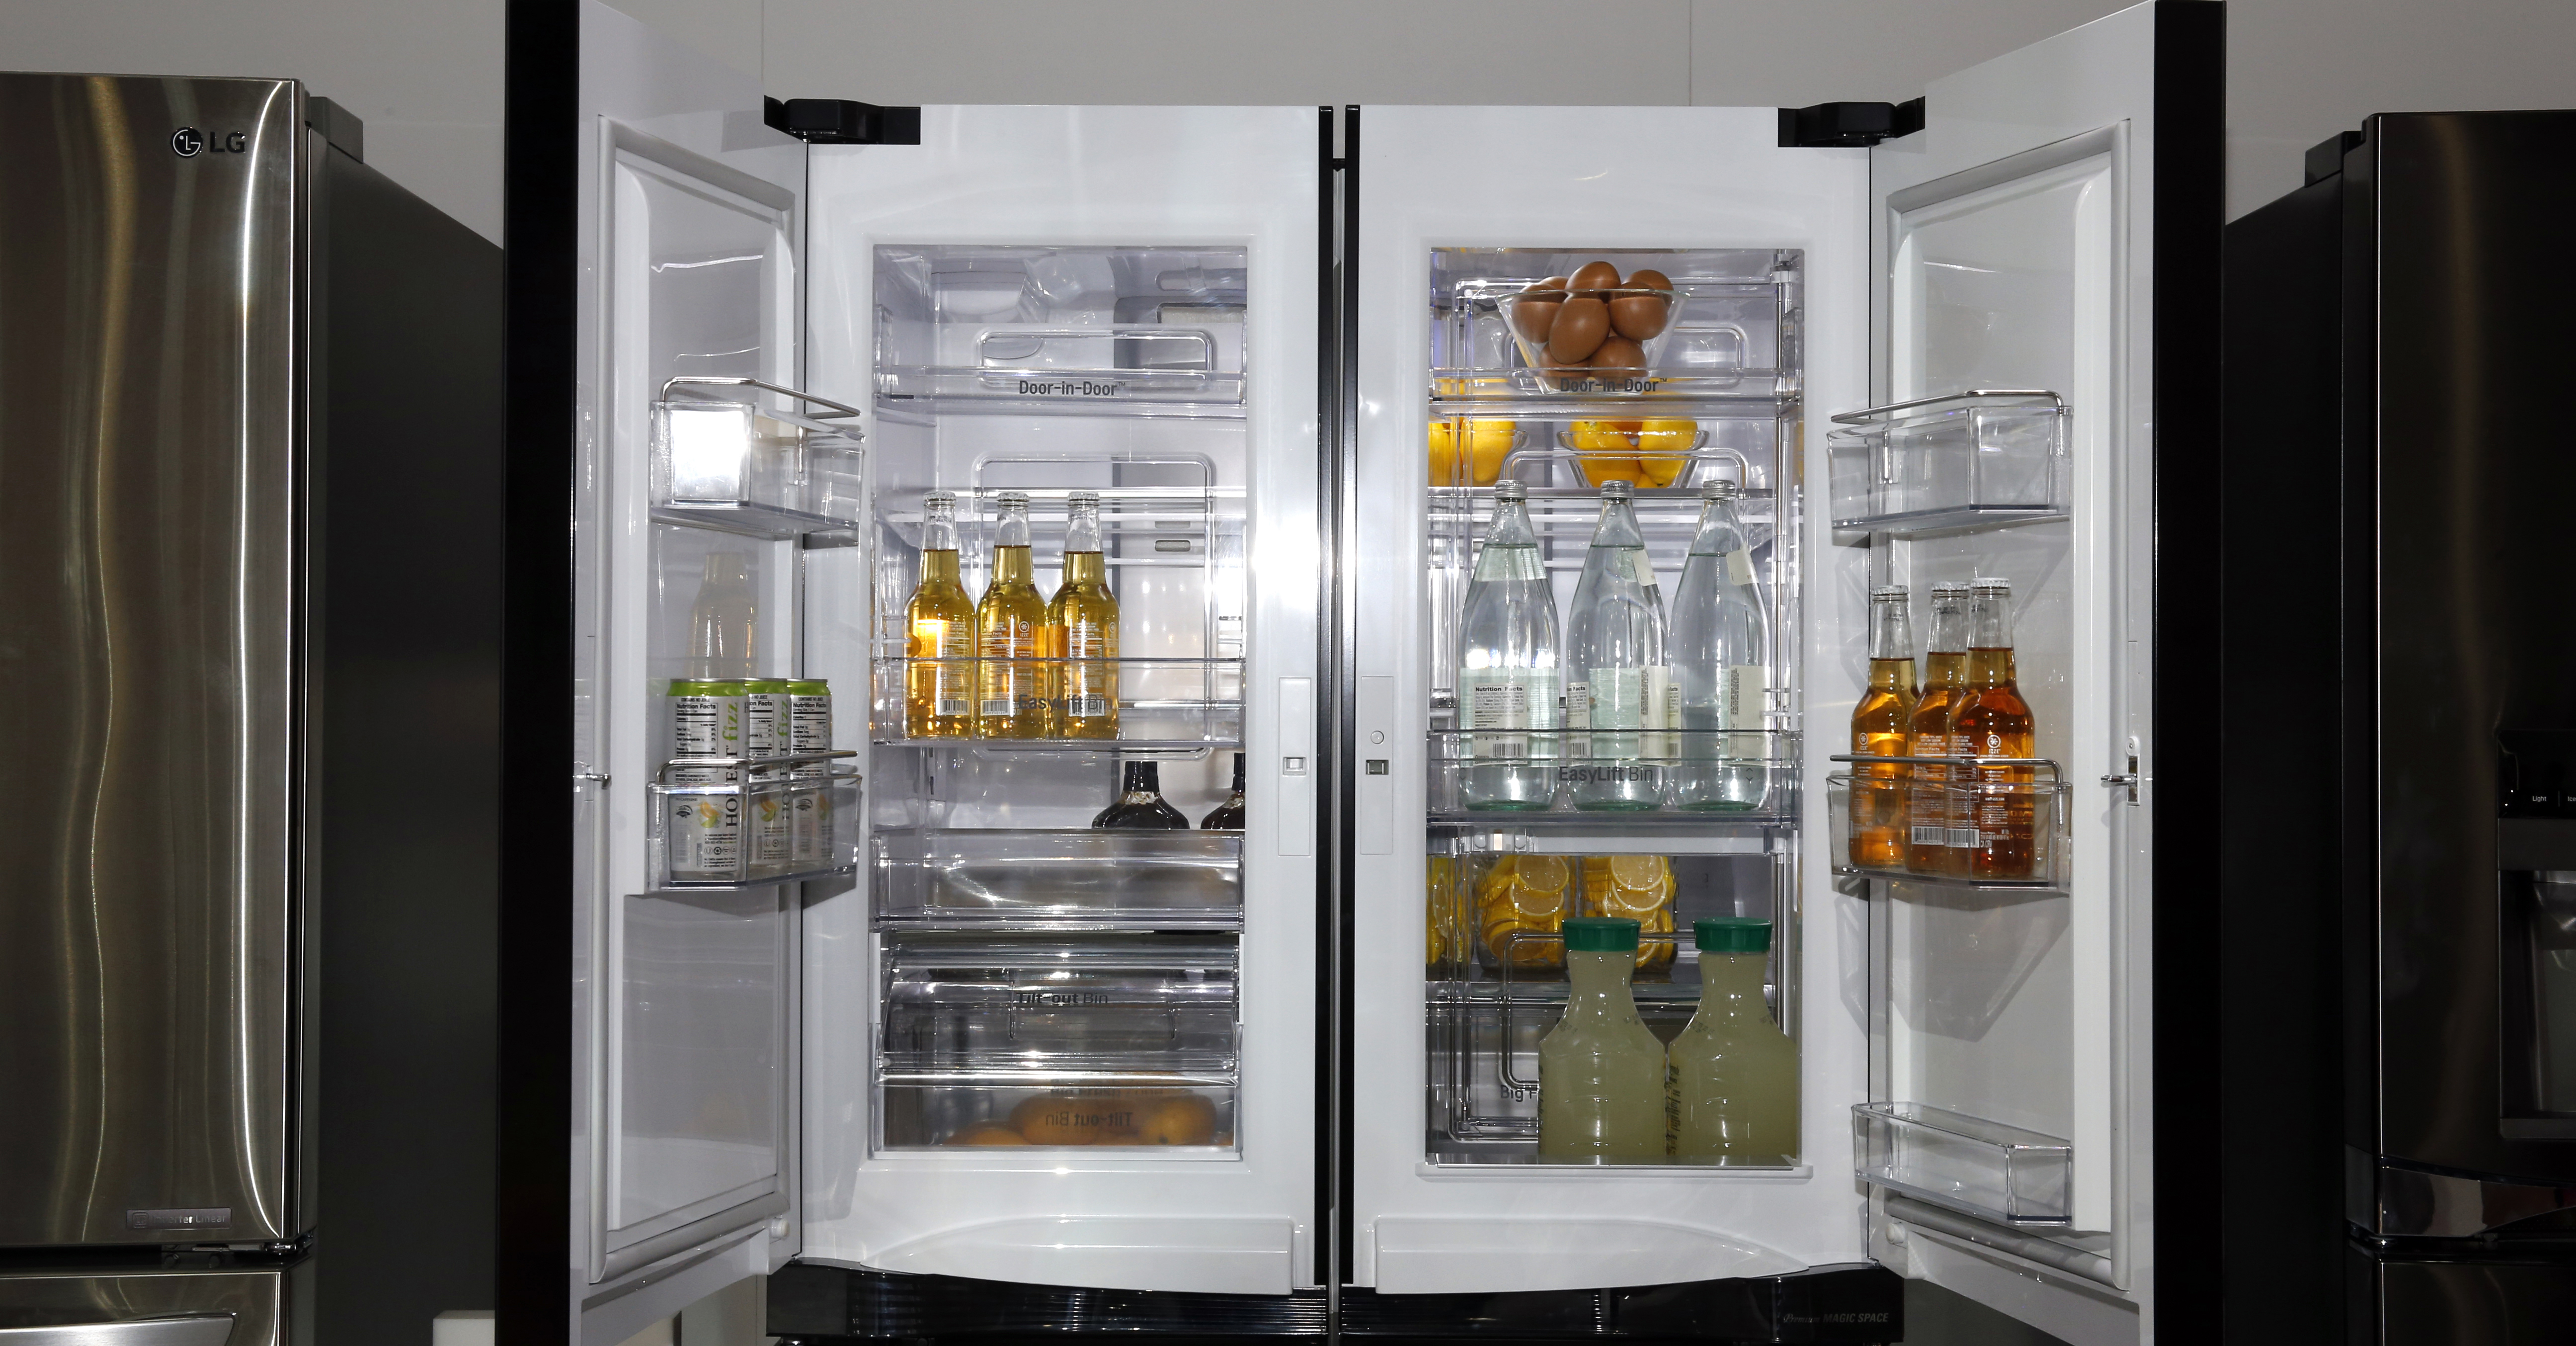 make a fridge look built in